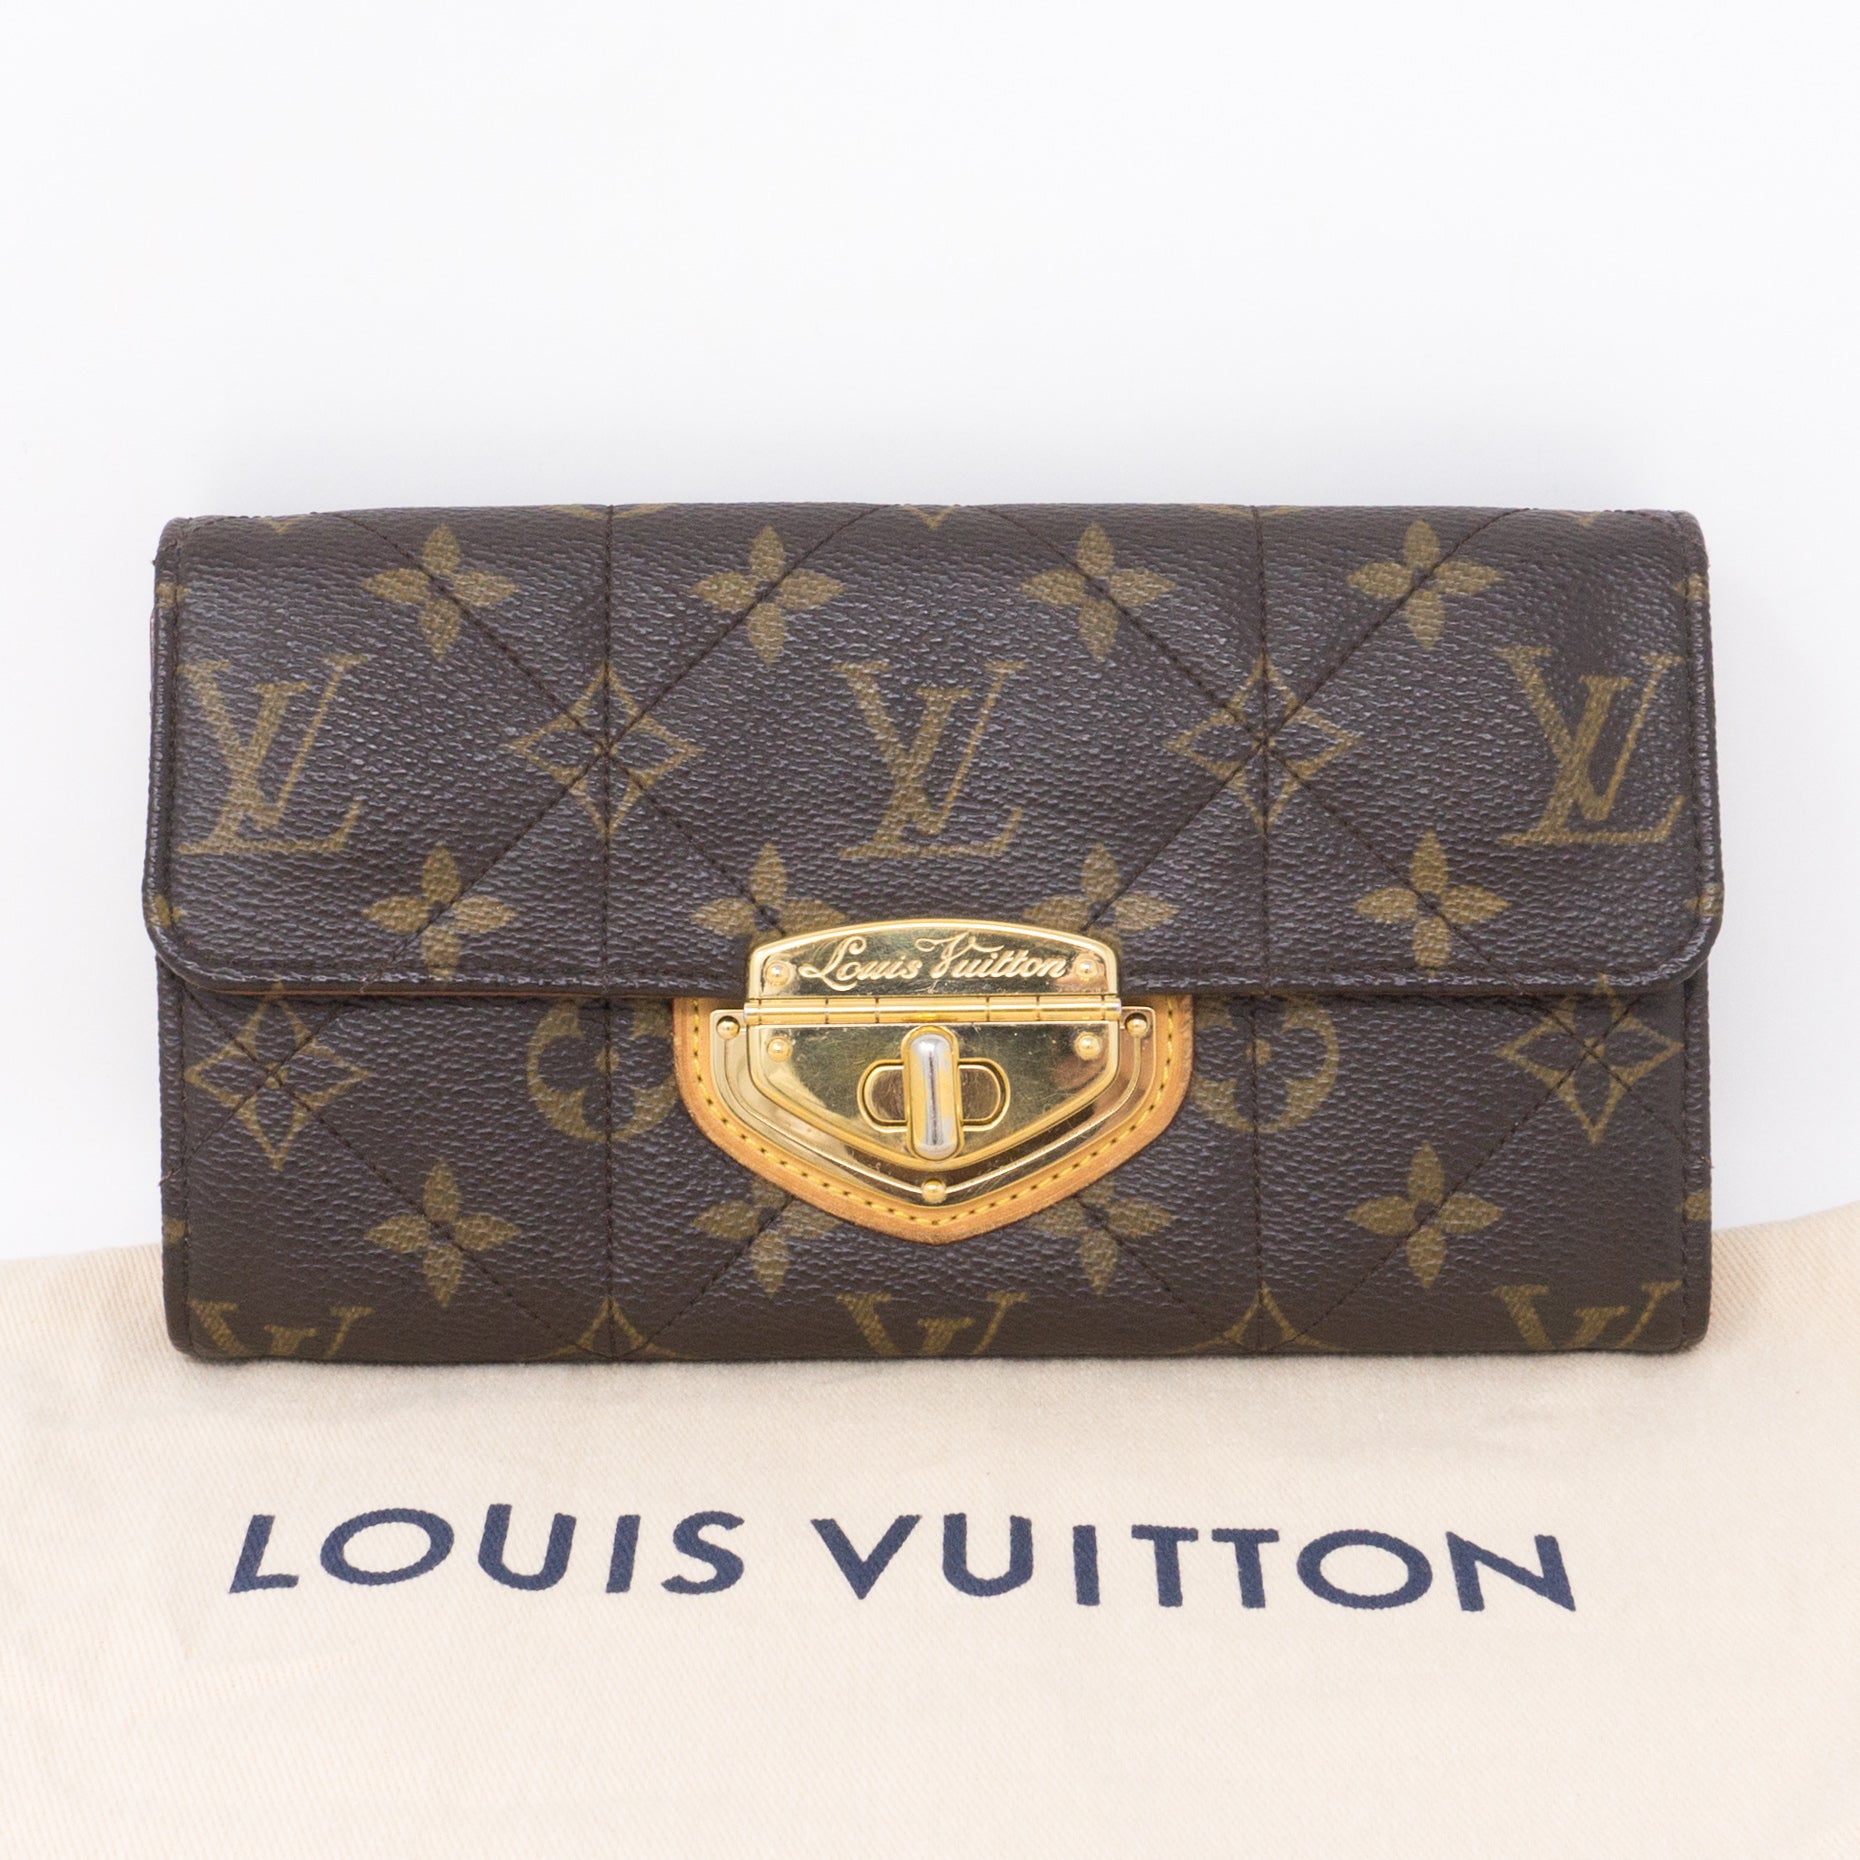 Louis Vuitton – Louis Vuitton Sarah Wallet Monogram – Queen Station